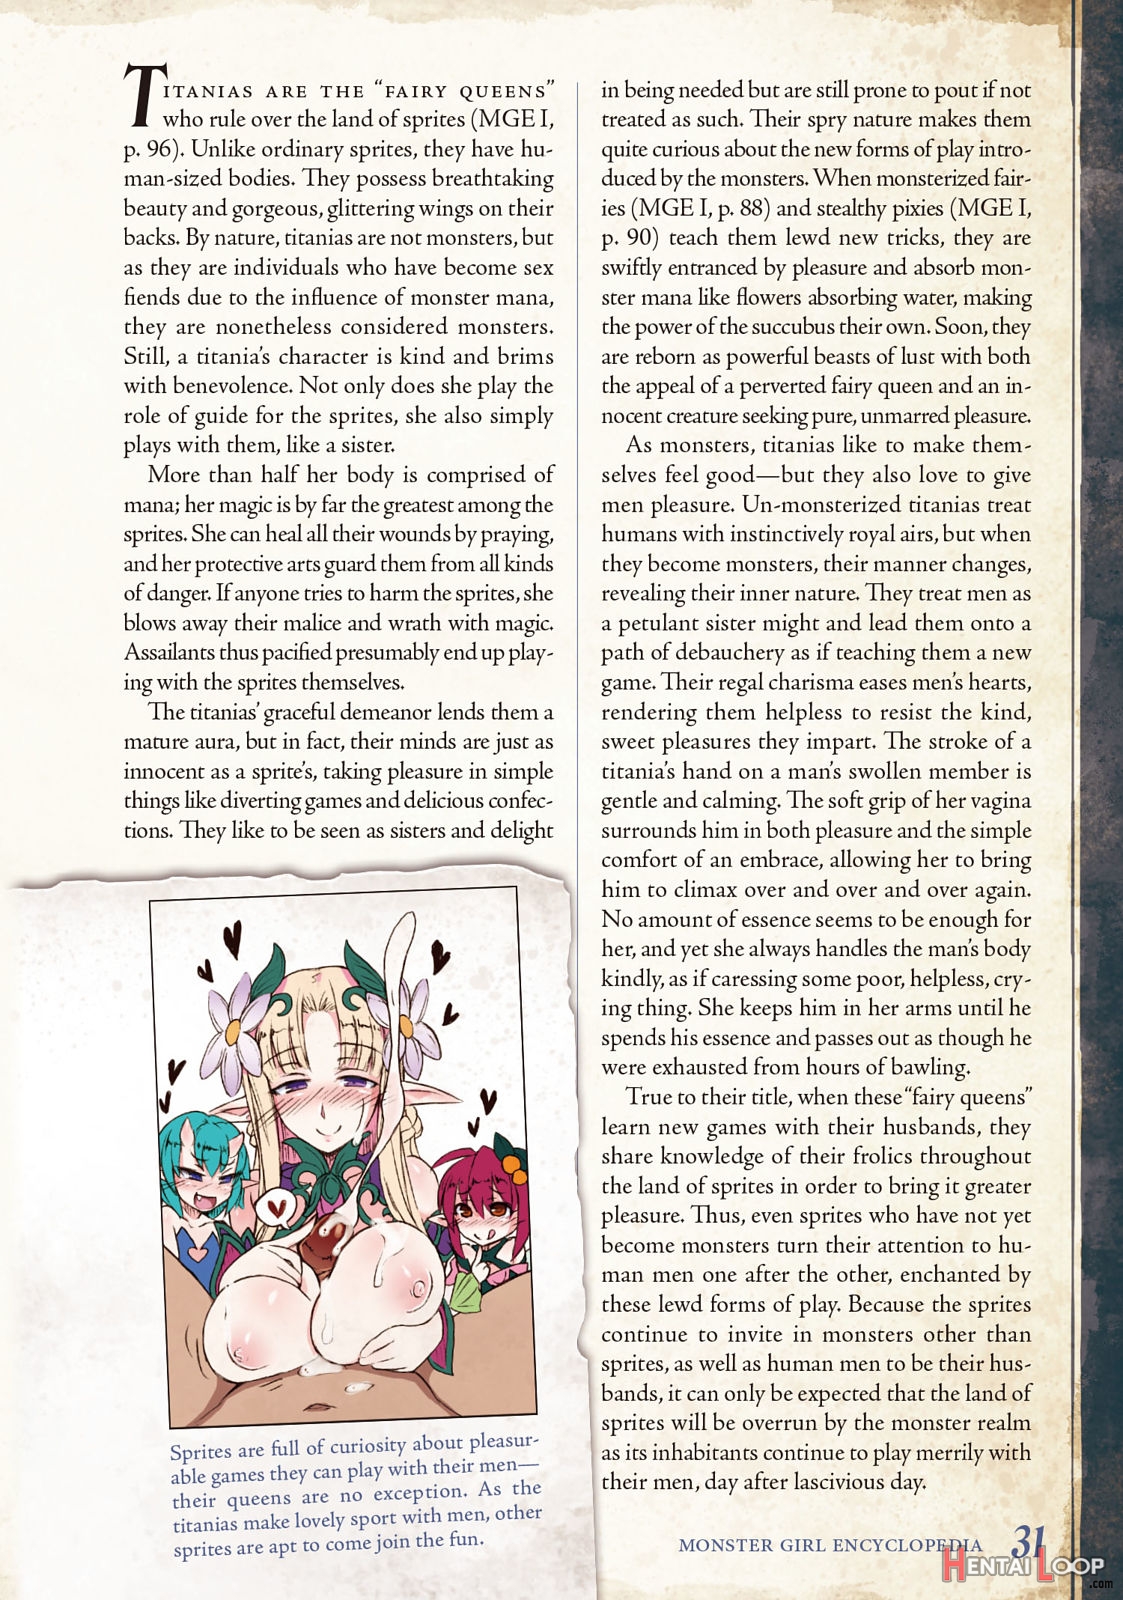 Monster Girl Encyclopedia Vol. 2 page 32